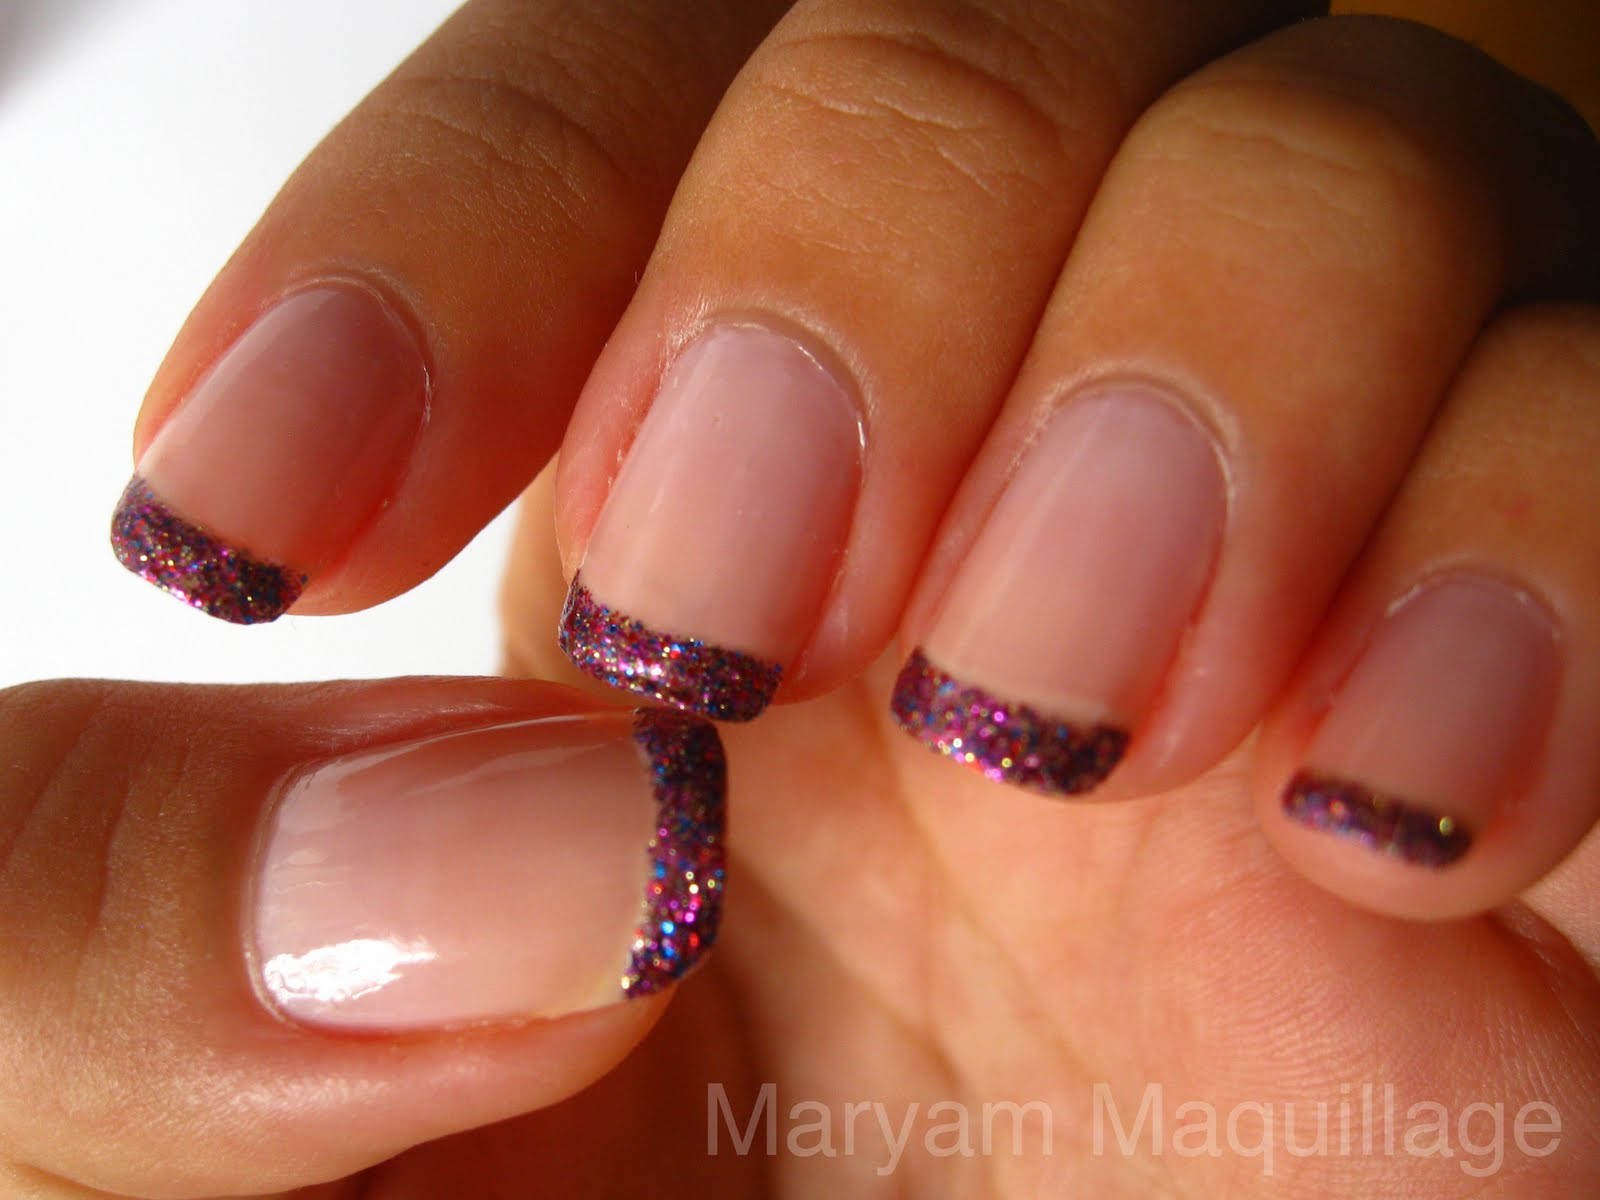 Red Glitter Tips Nails
 Maryam Maquillage Rockstar Pink Nail Tips